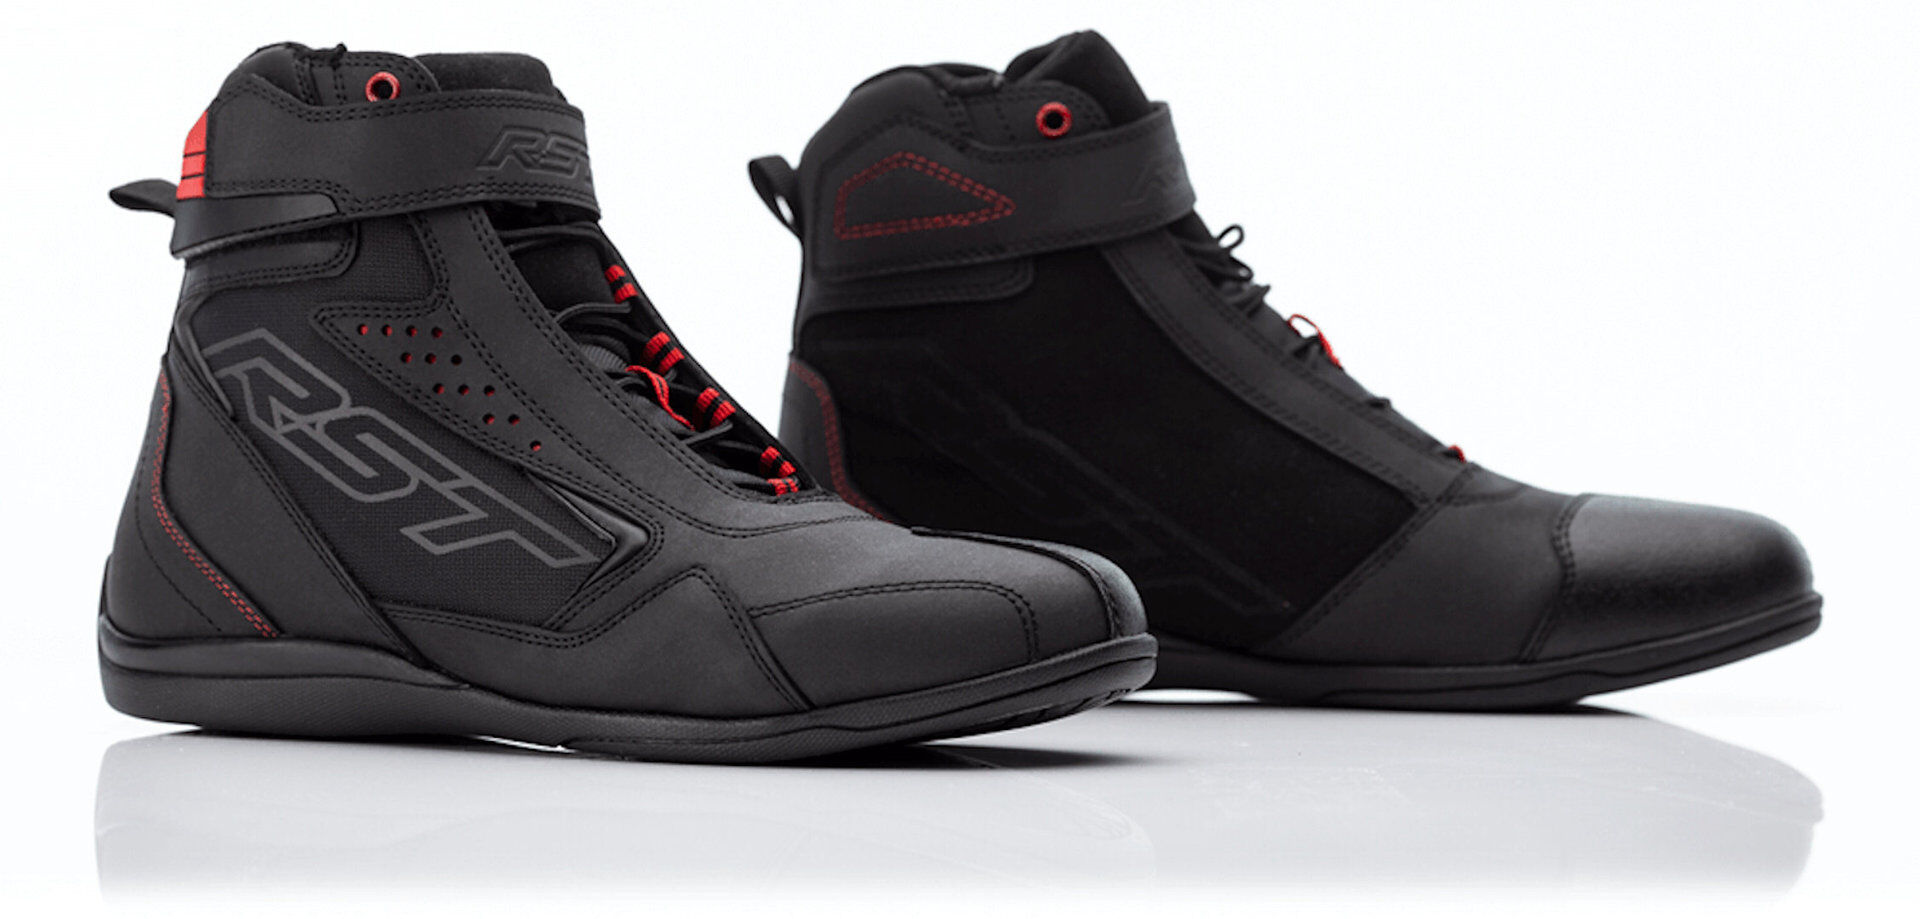 RST Frontier Zapatos de motocicleta para mujer - Negro Rojo (37)